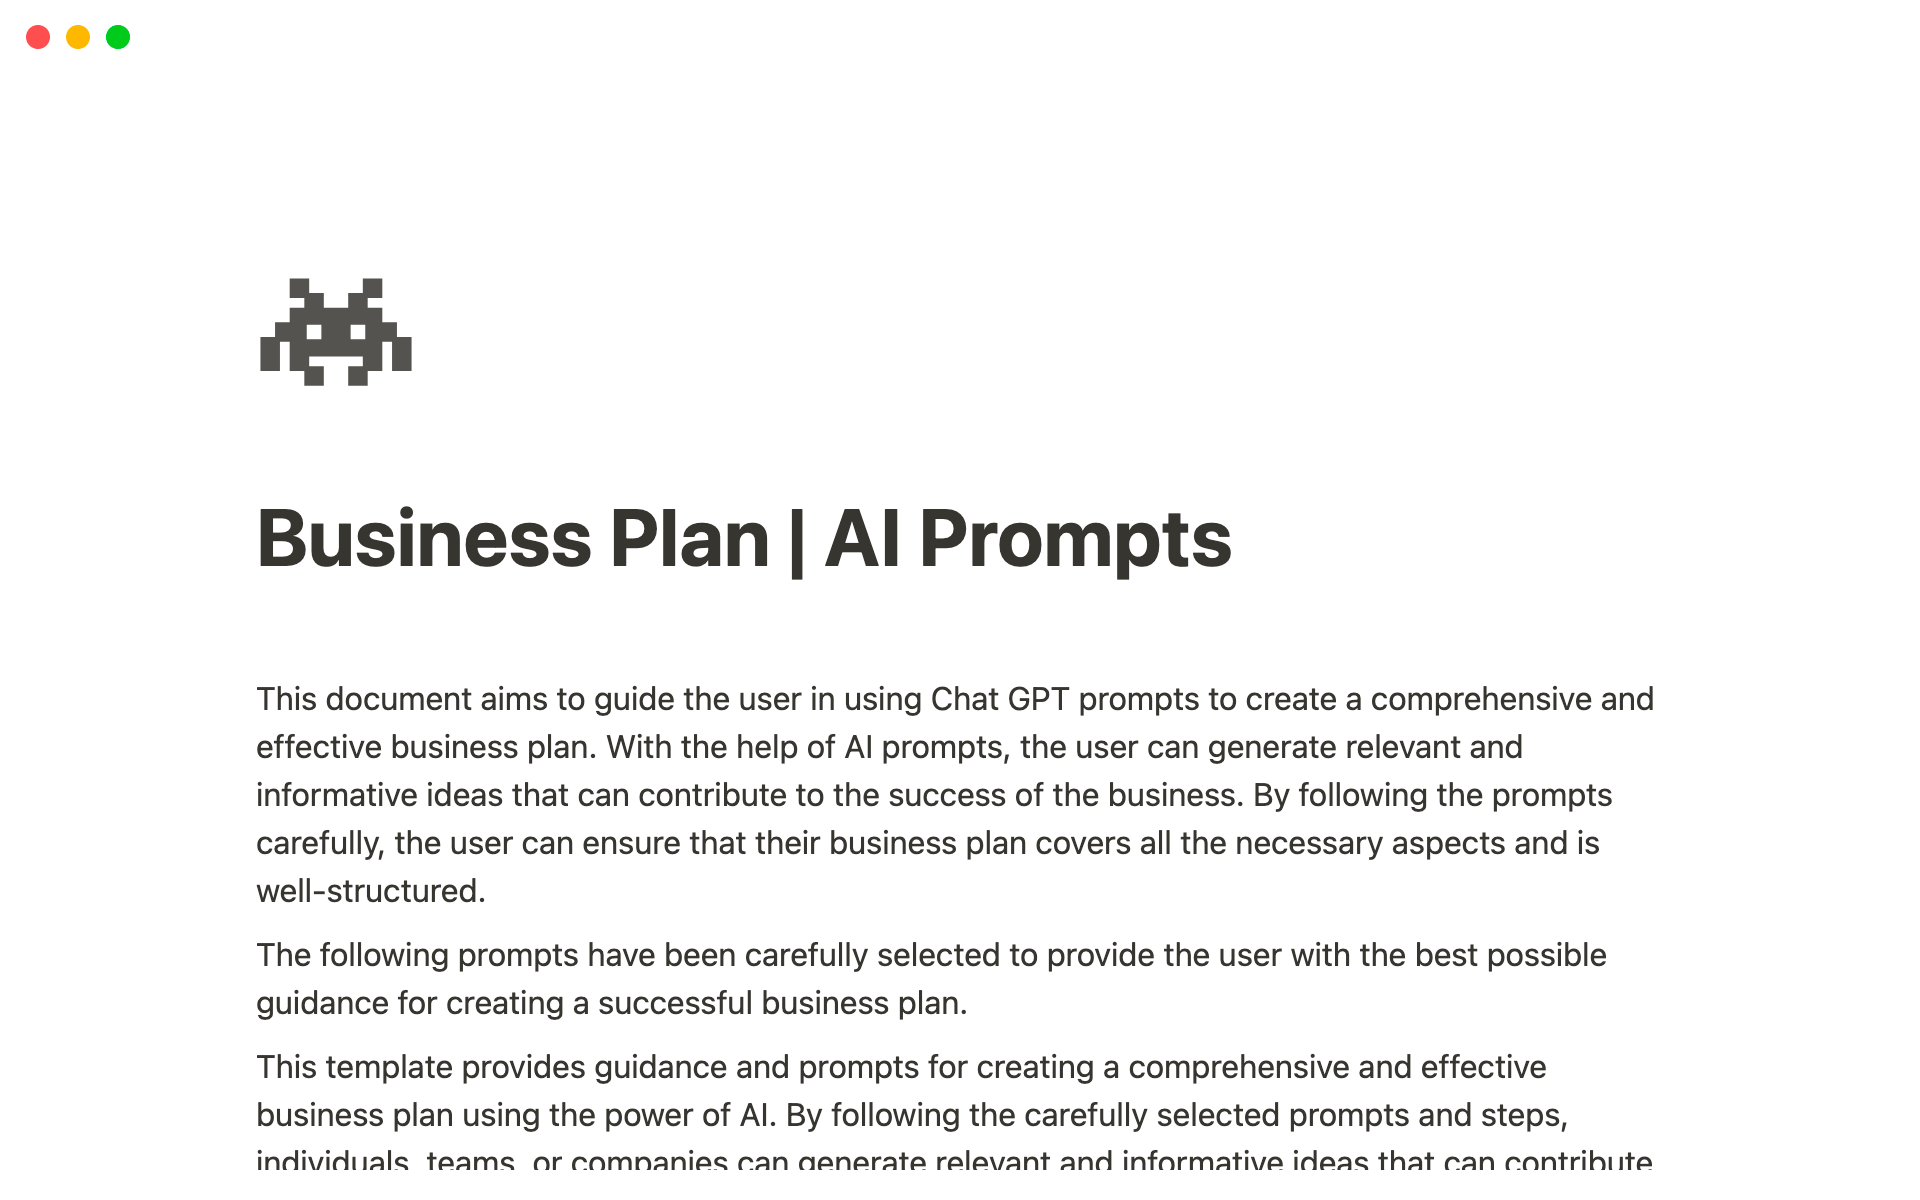 Business Plan - AI Prompts님의 템플릿 미리보기